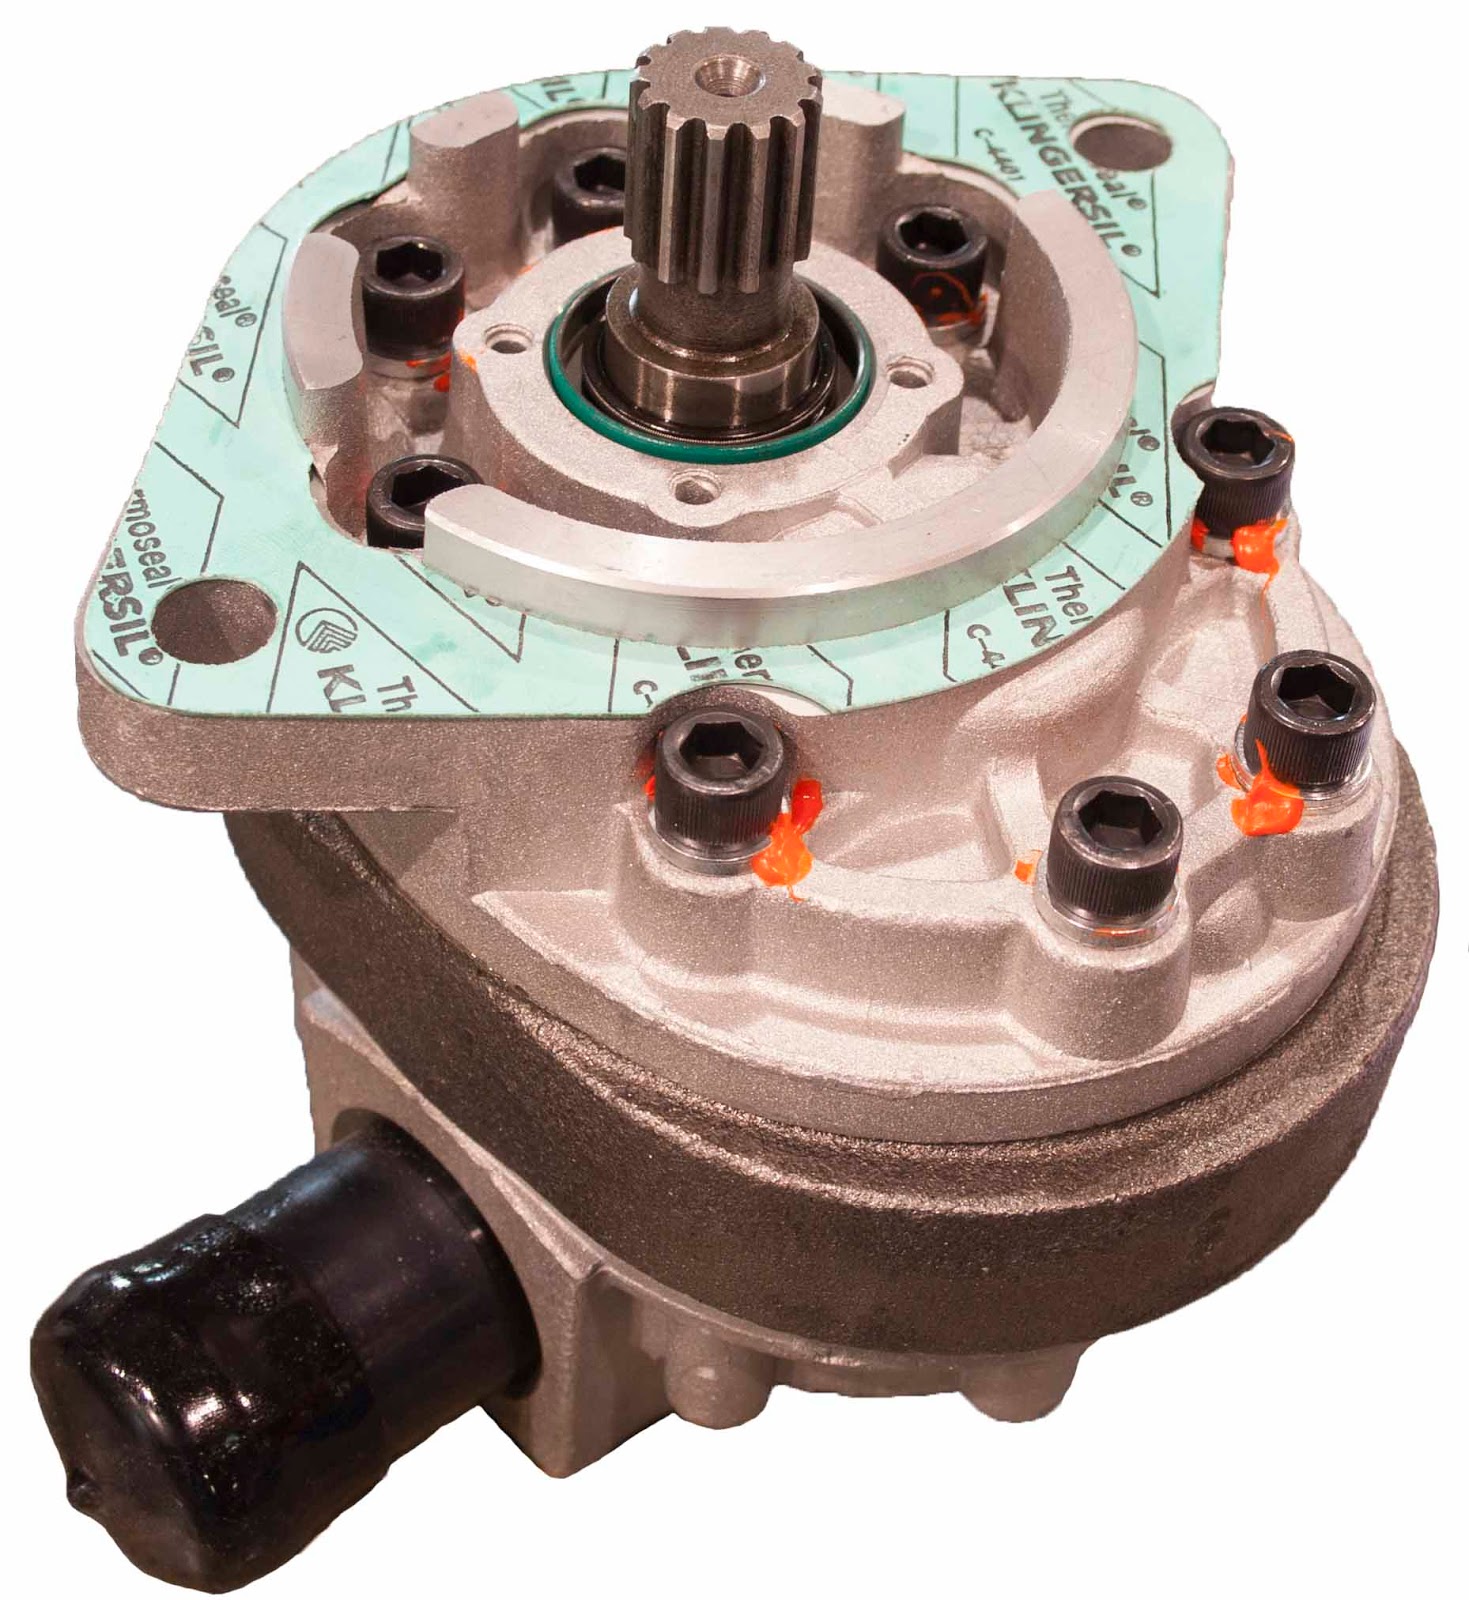 Mountaineer smidig Catena Flint Hydraulics, Inc.: Webster hydraulic gear pumps & valves